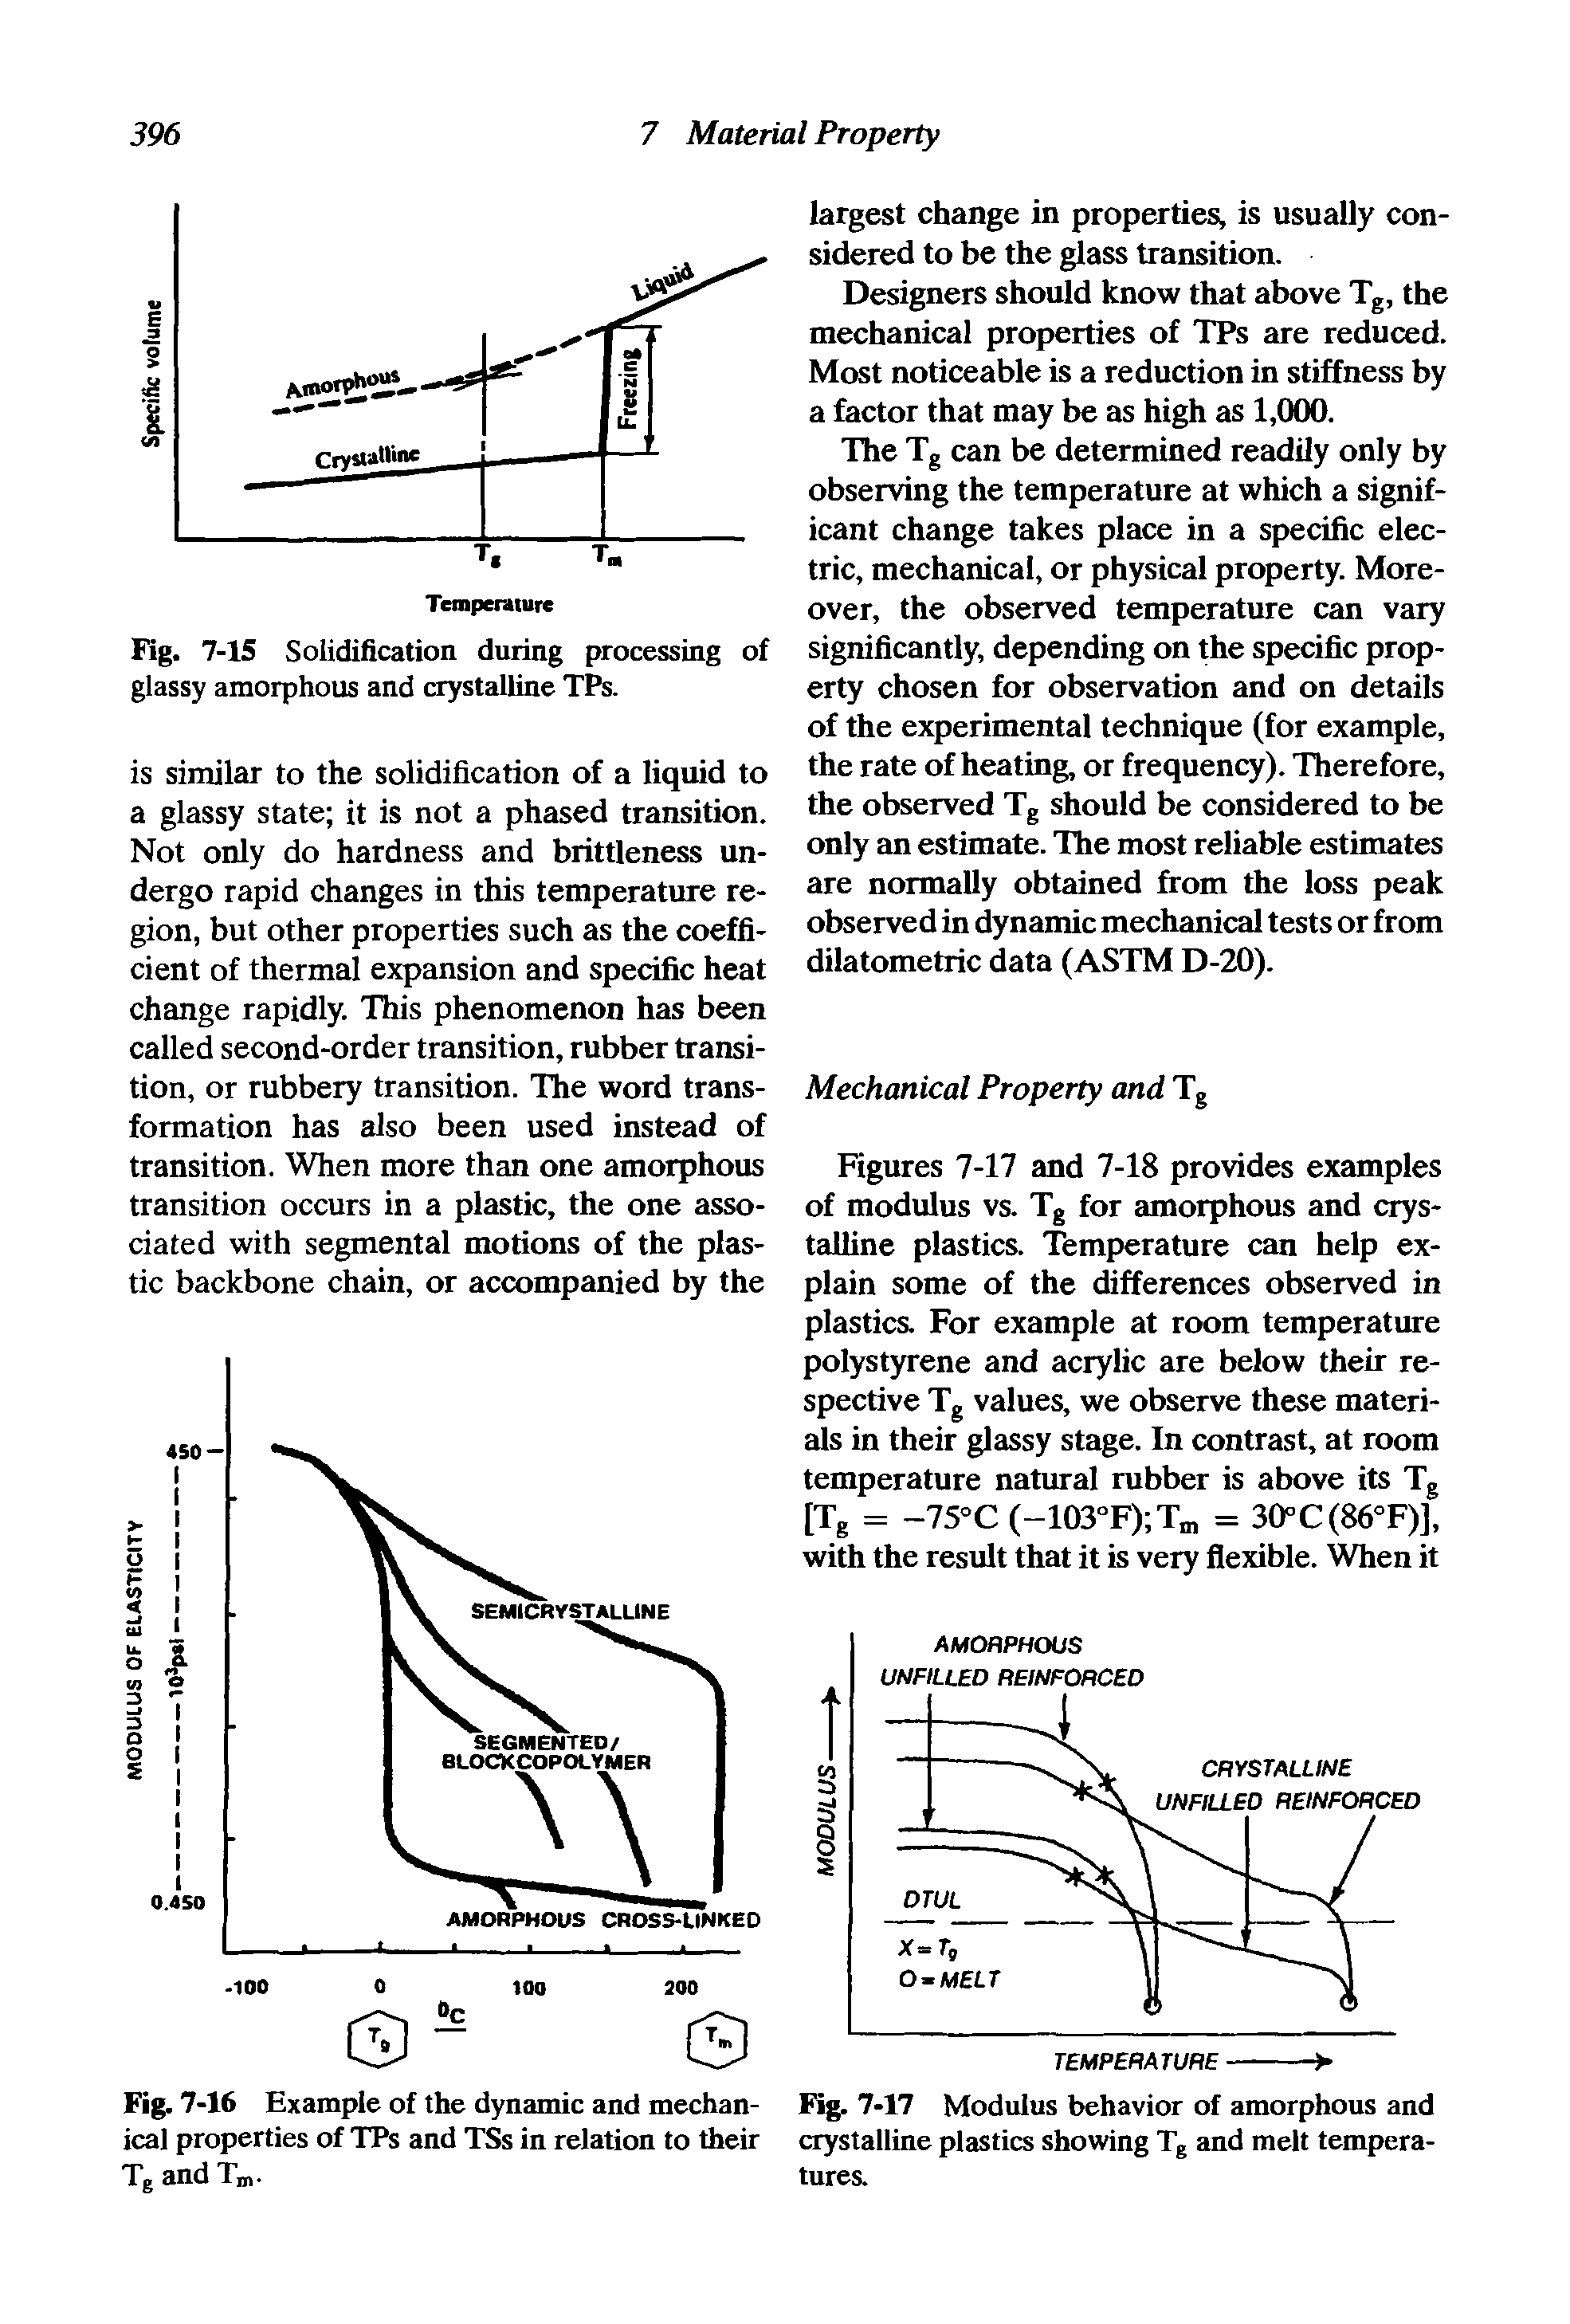 Fig. 7-17 Modulus behavior of amorphous and crystalline plastics showing Tg and melt temperatures.